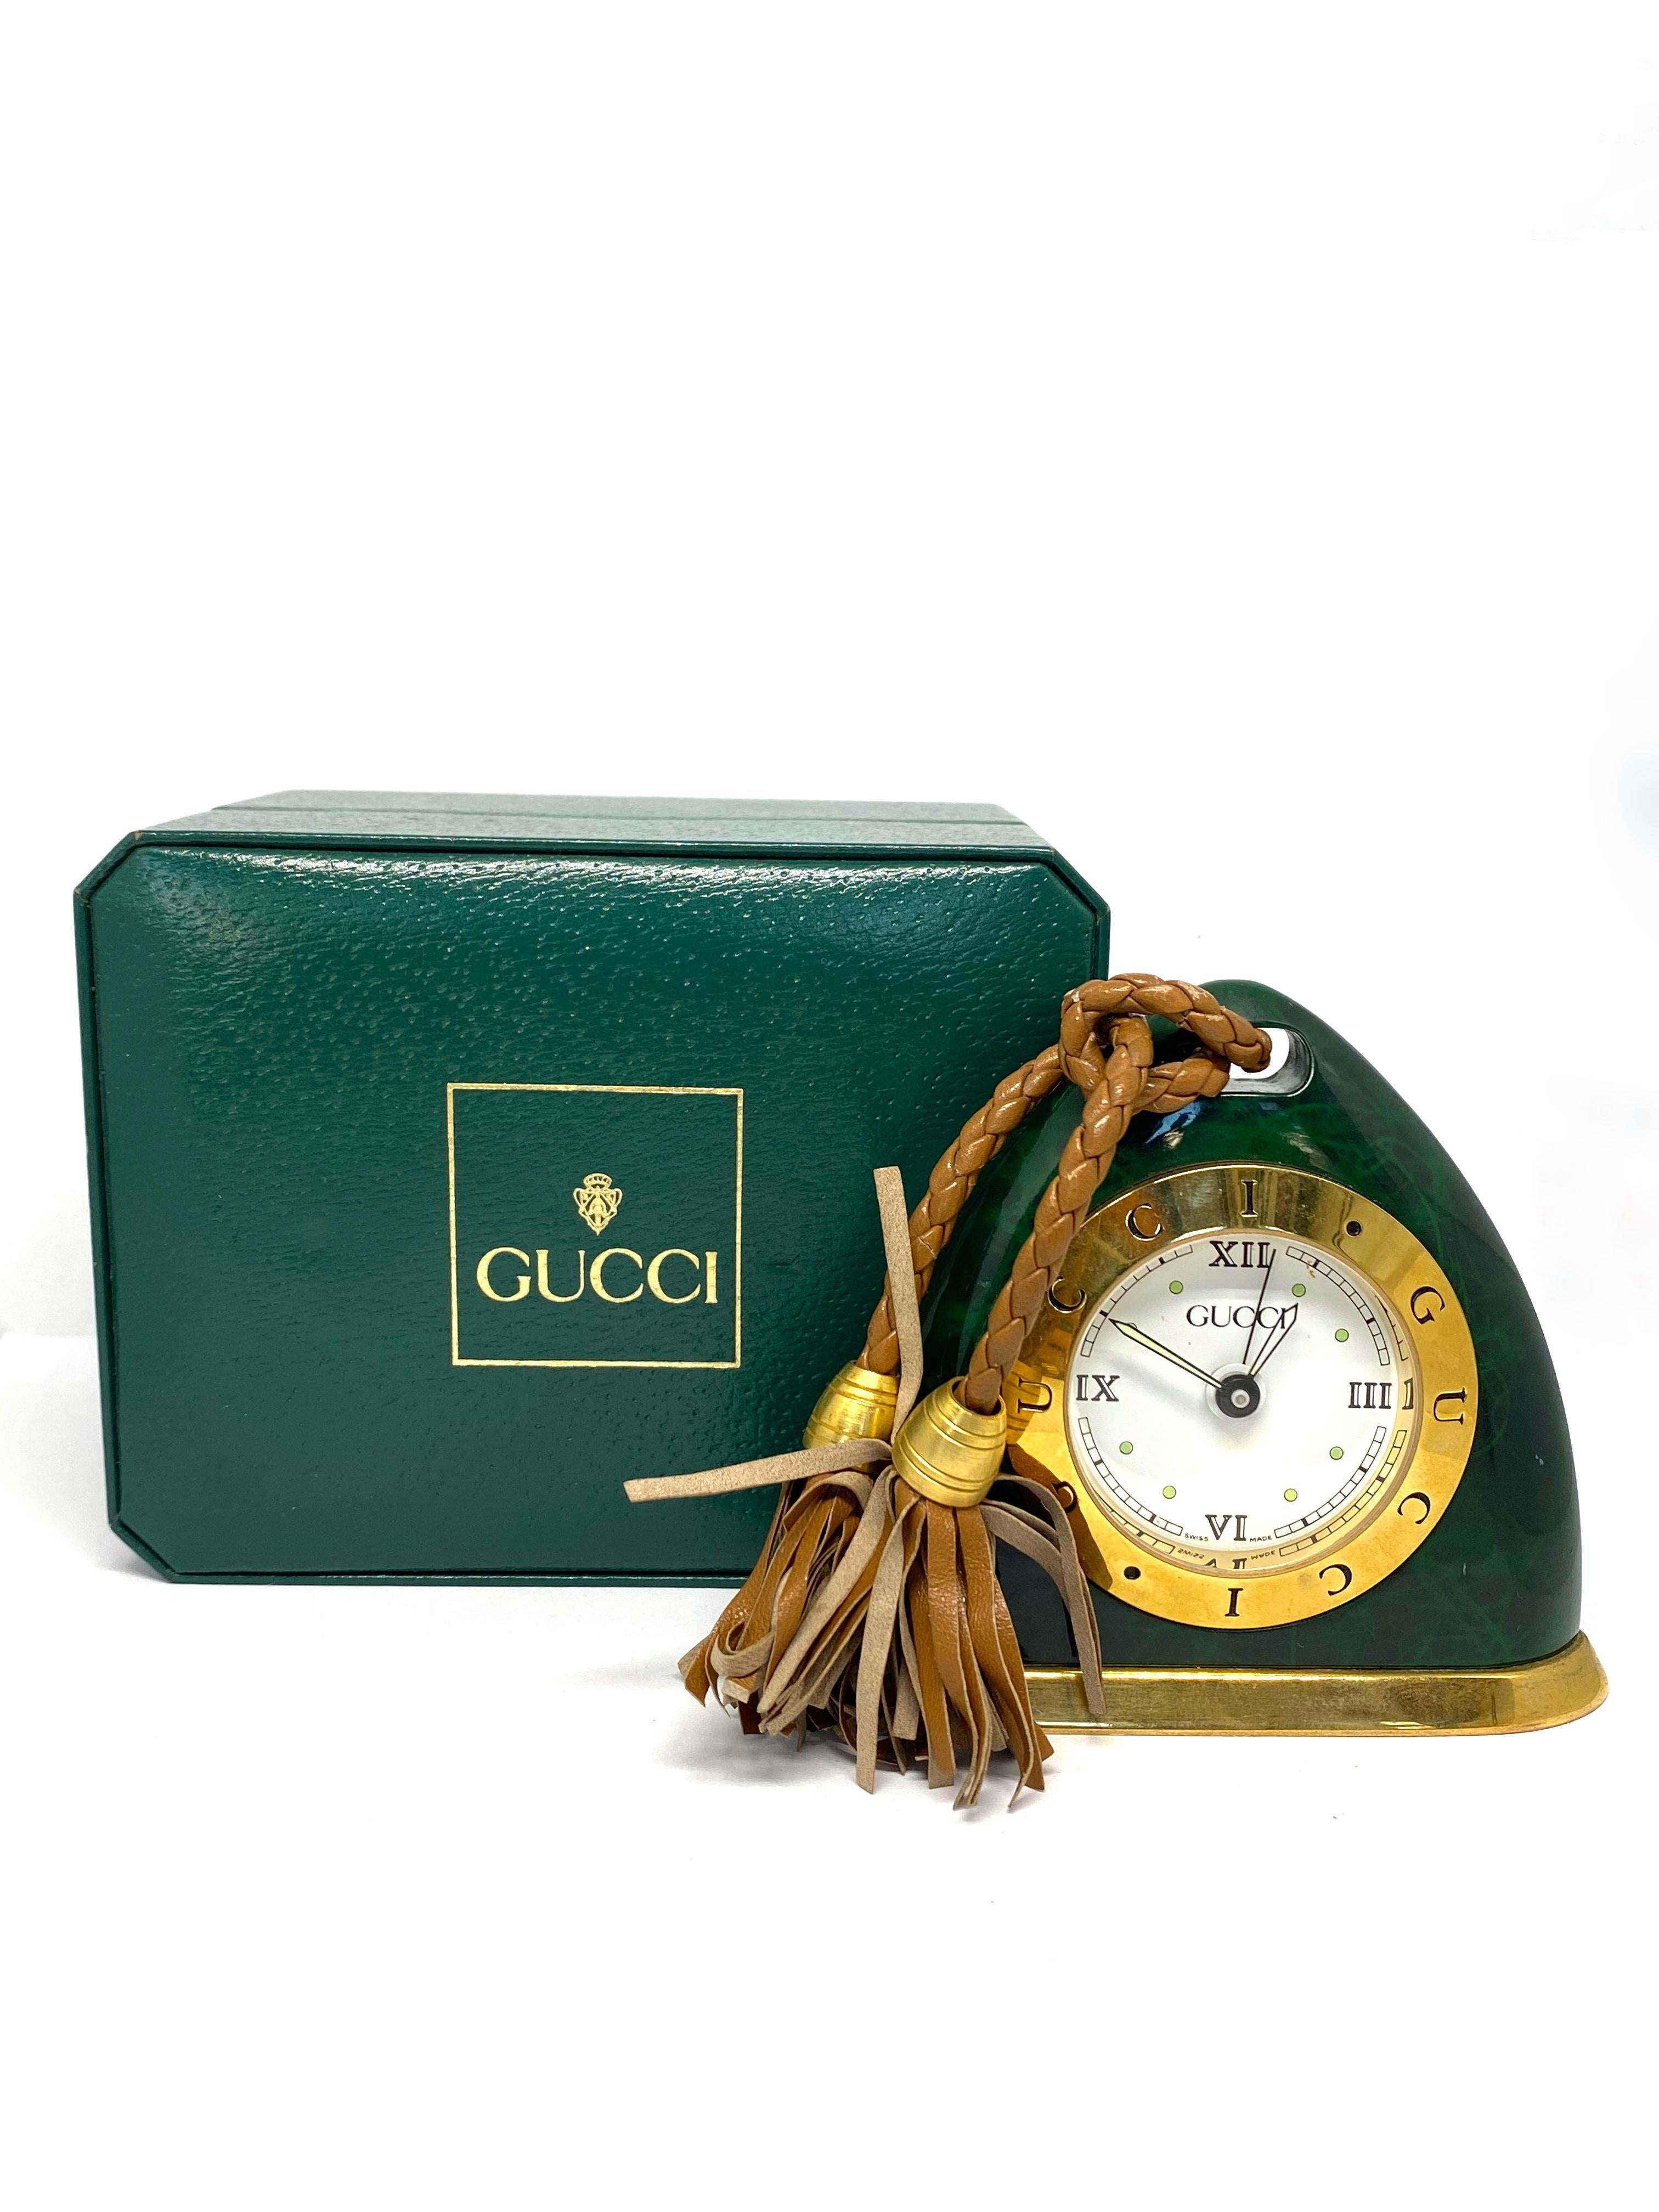 Vintage Gucci Green Alarm Desk Clock w/ Box 1